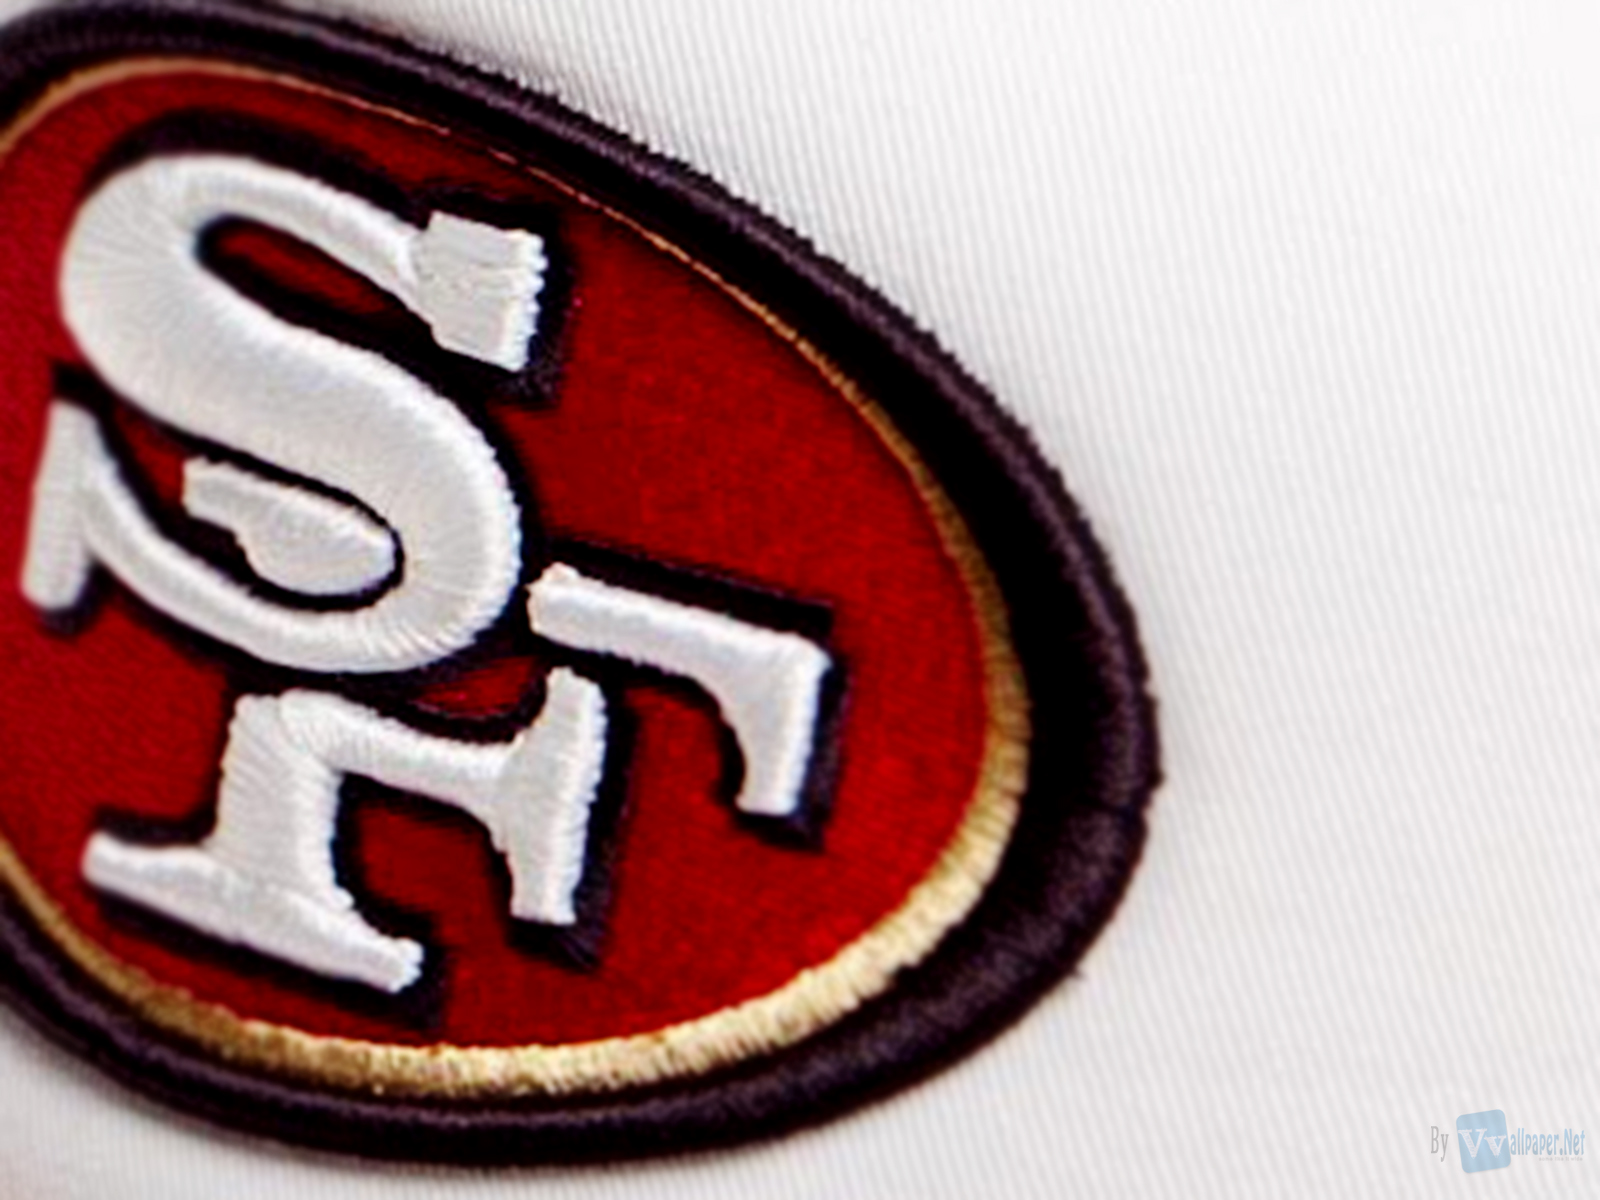 Sf 49ers Nfl Team Logo Close Up HD Wallpaper Jpg